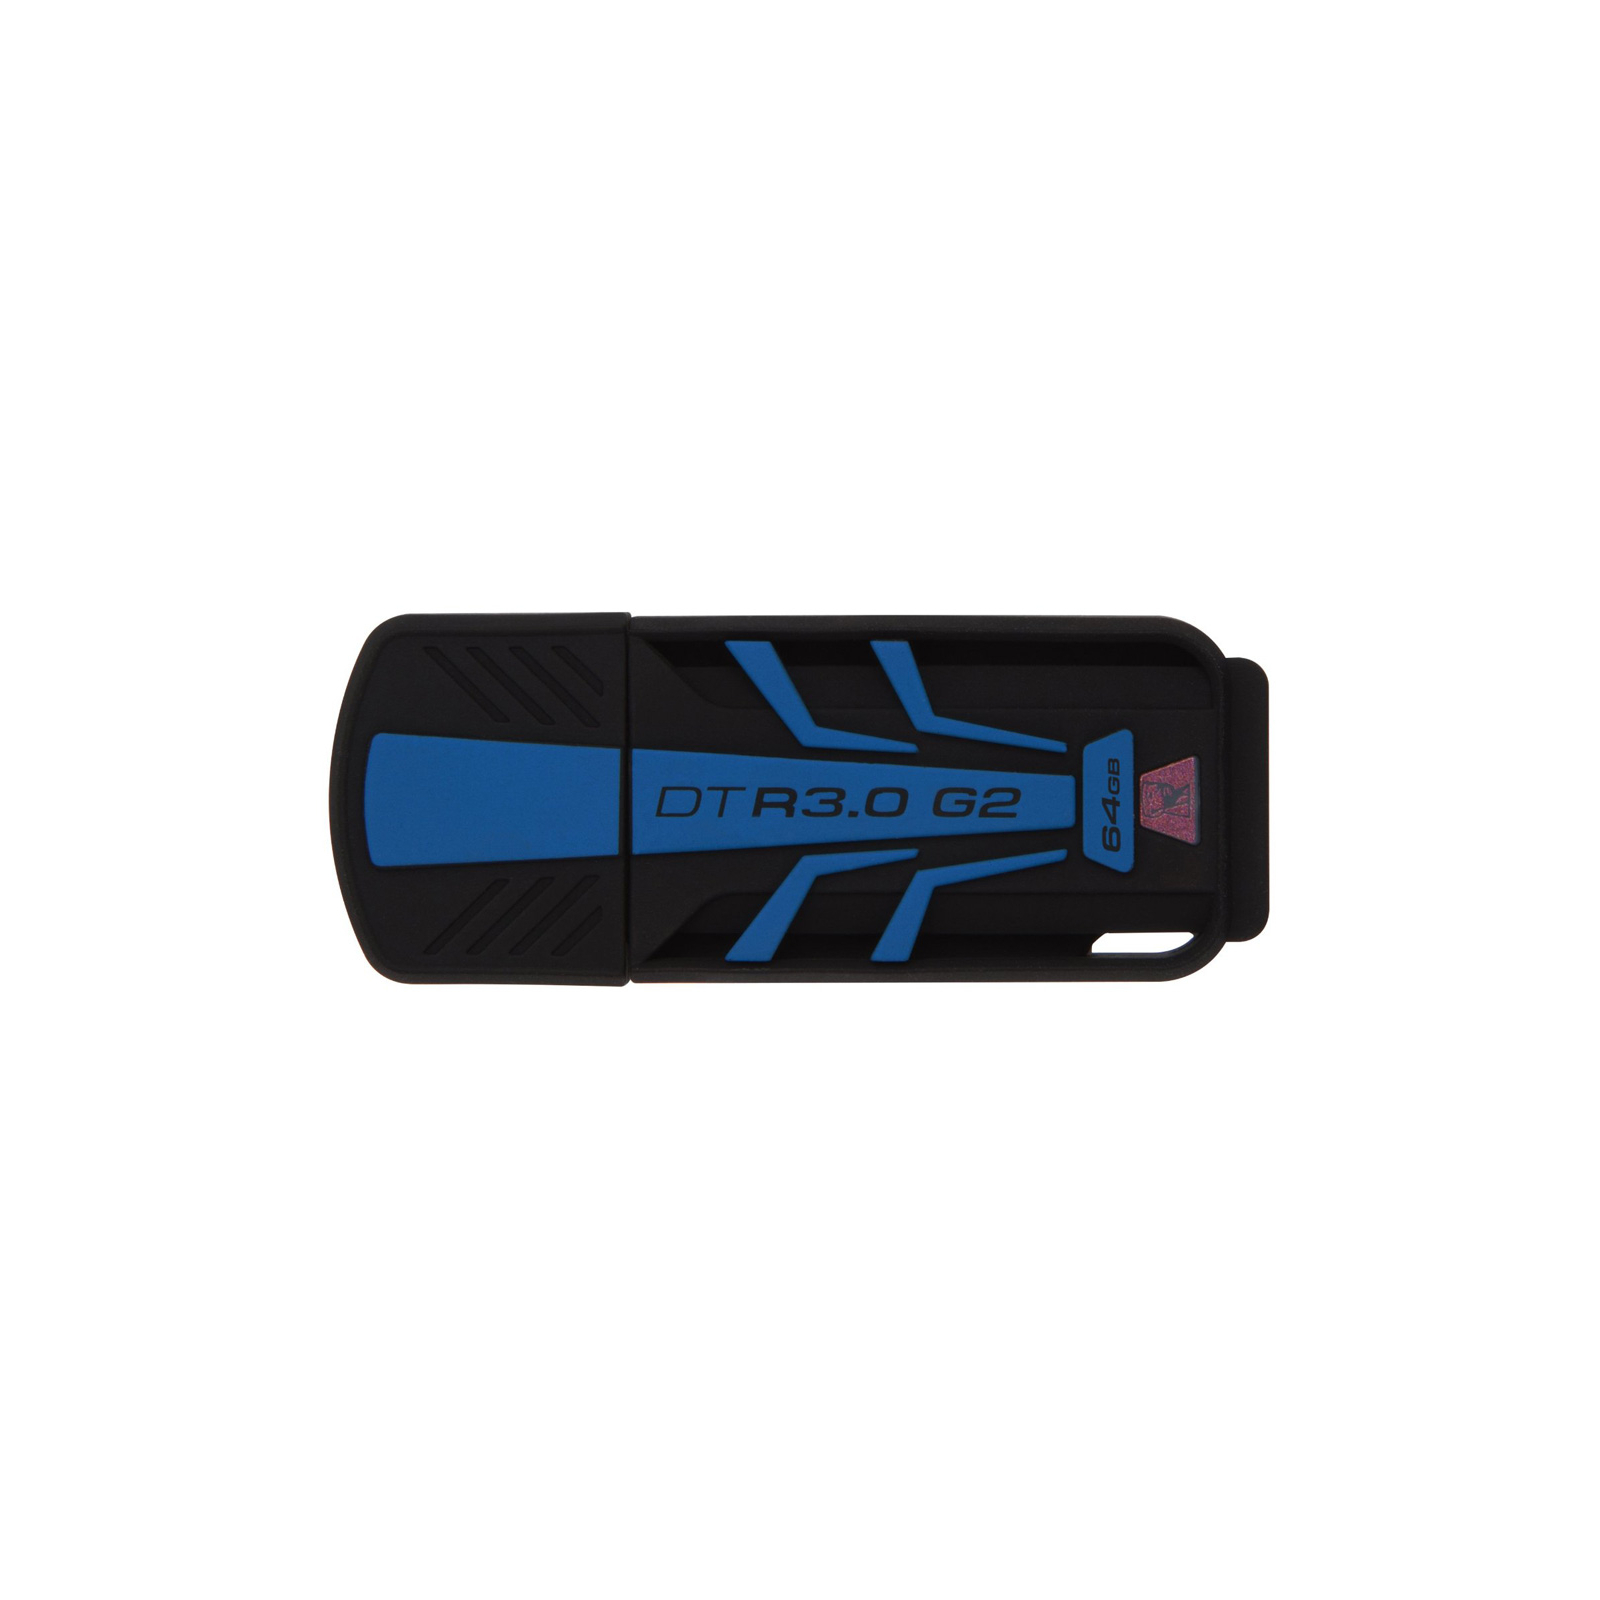 USB флеш накопитель Kingston 64GB DataTraveler R3.0 G2 USB 3.0 (DTR30G2/64GB)